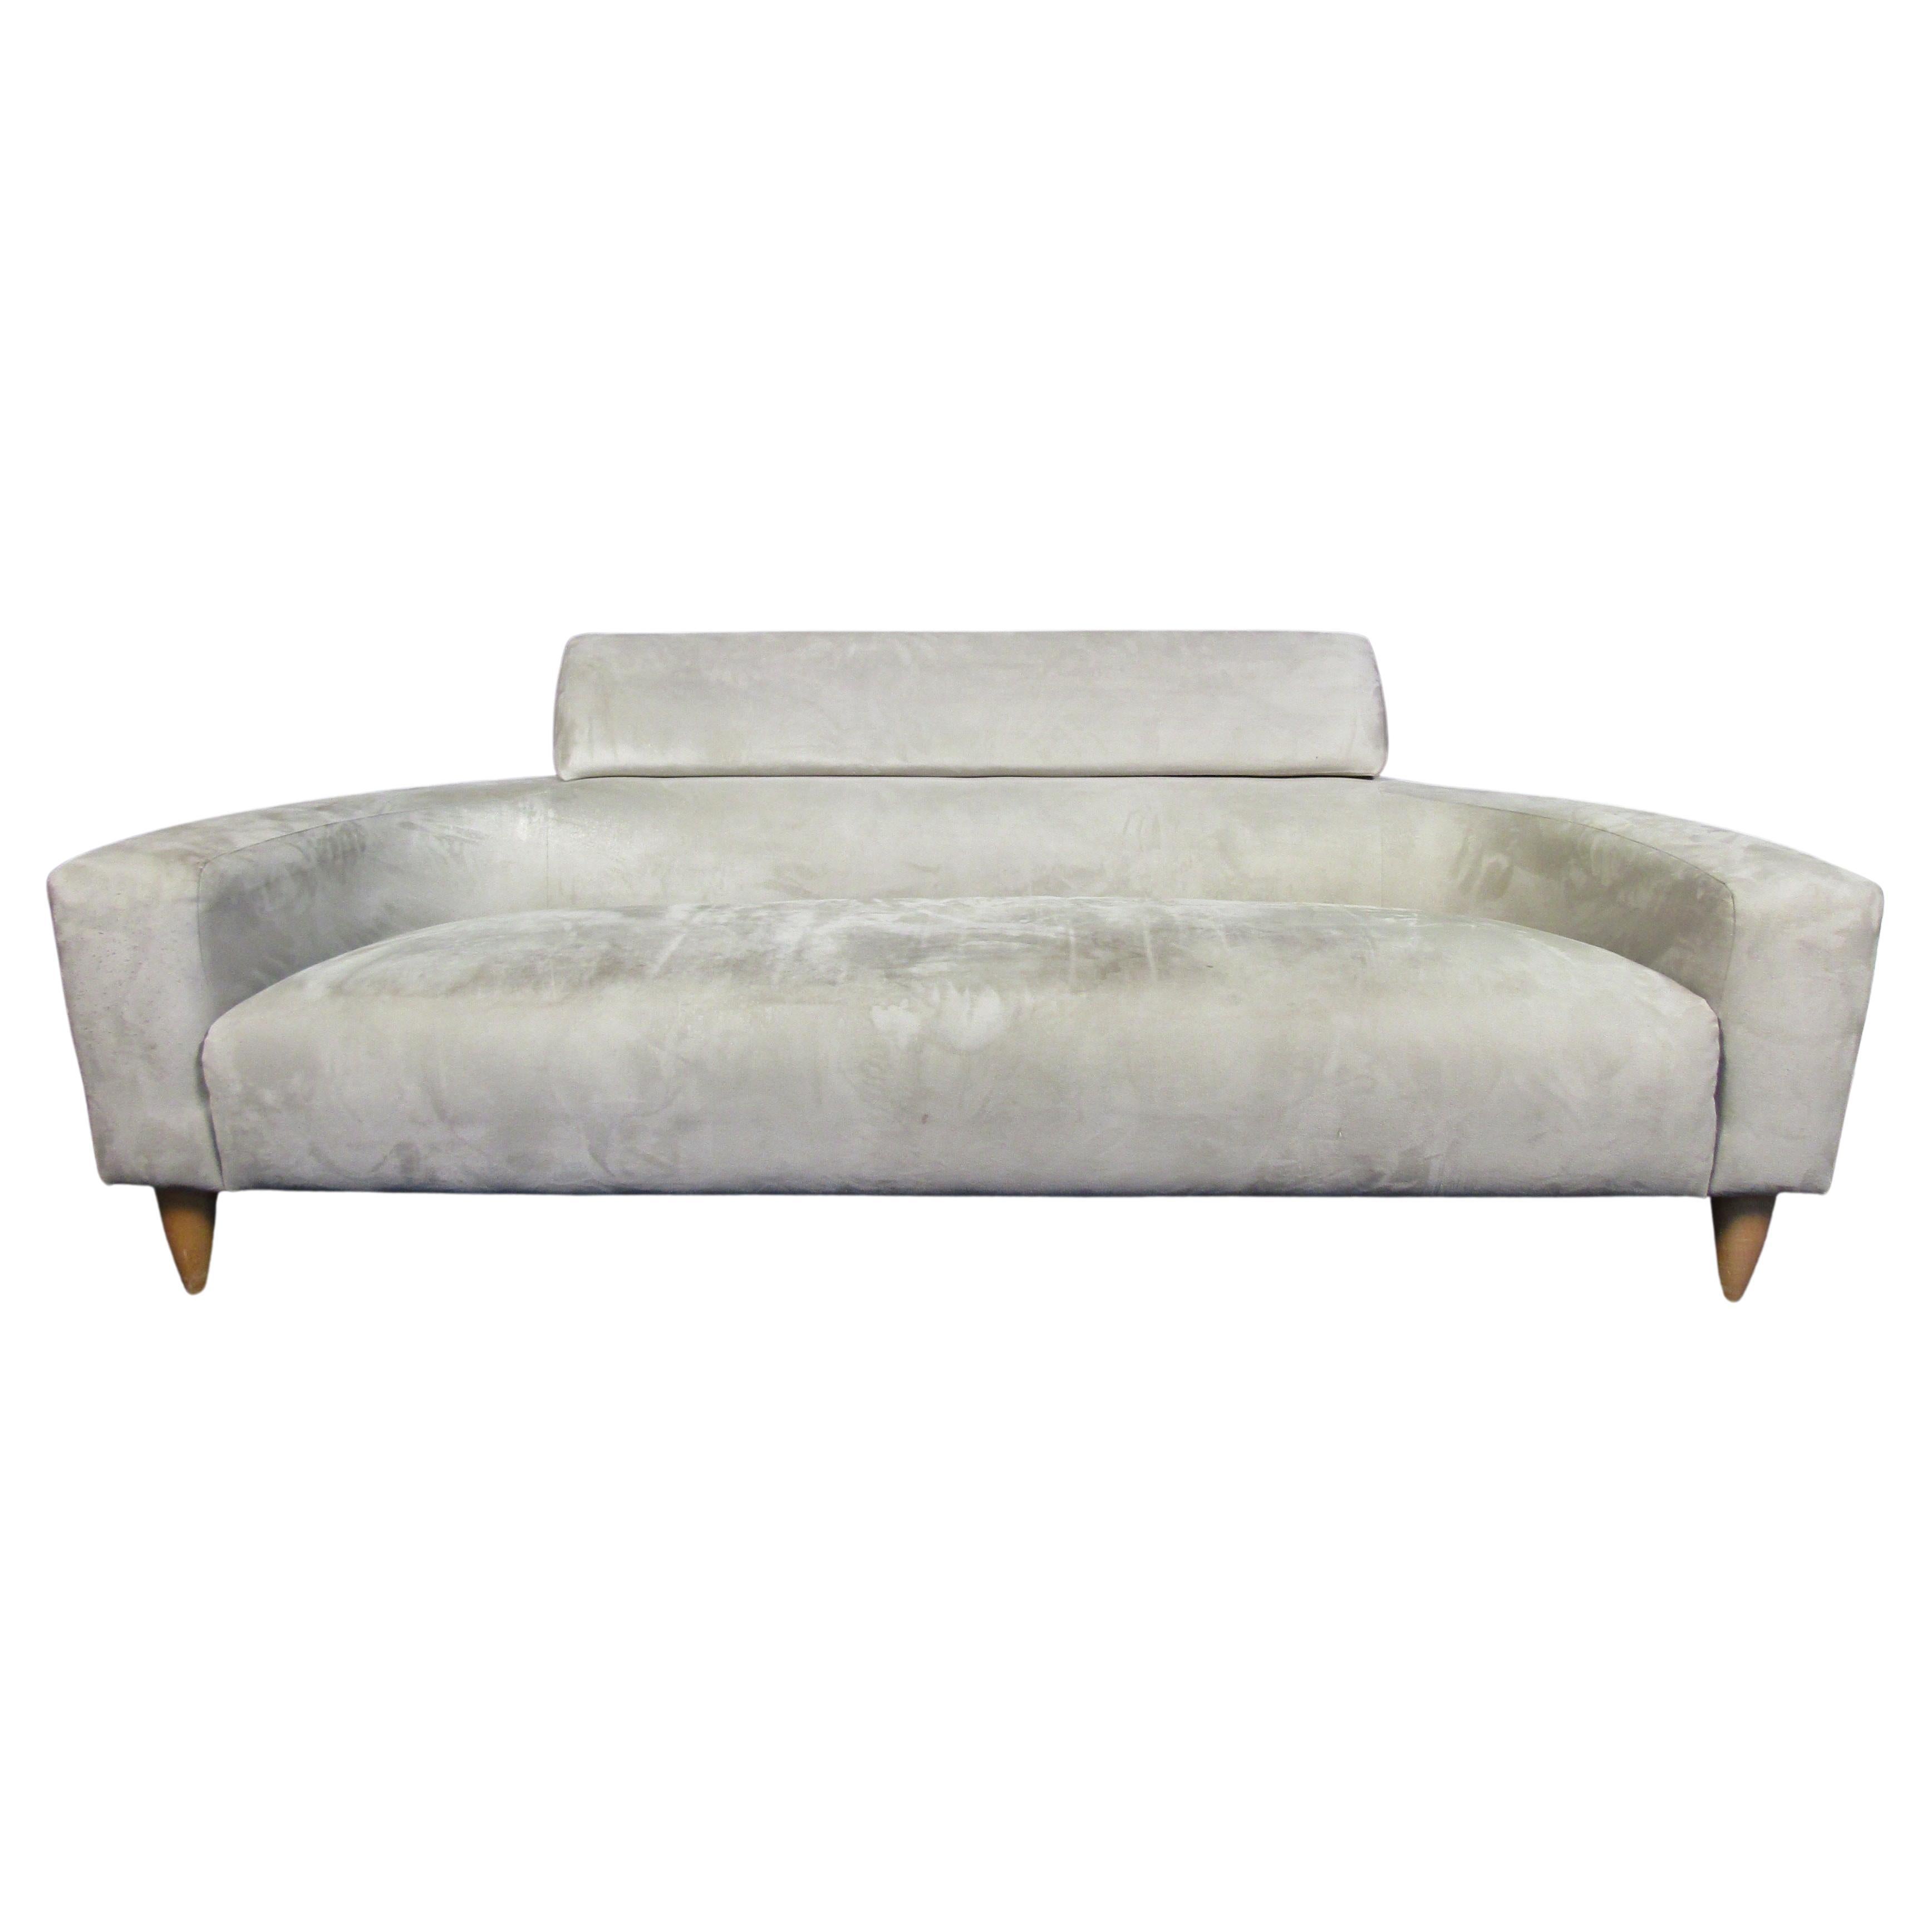 Light Modern Style Sofa For Sale